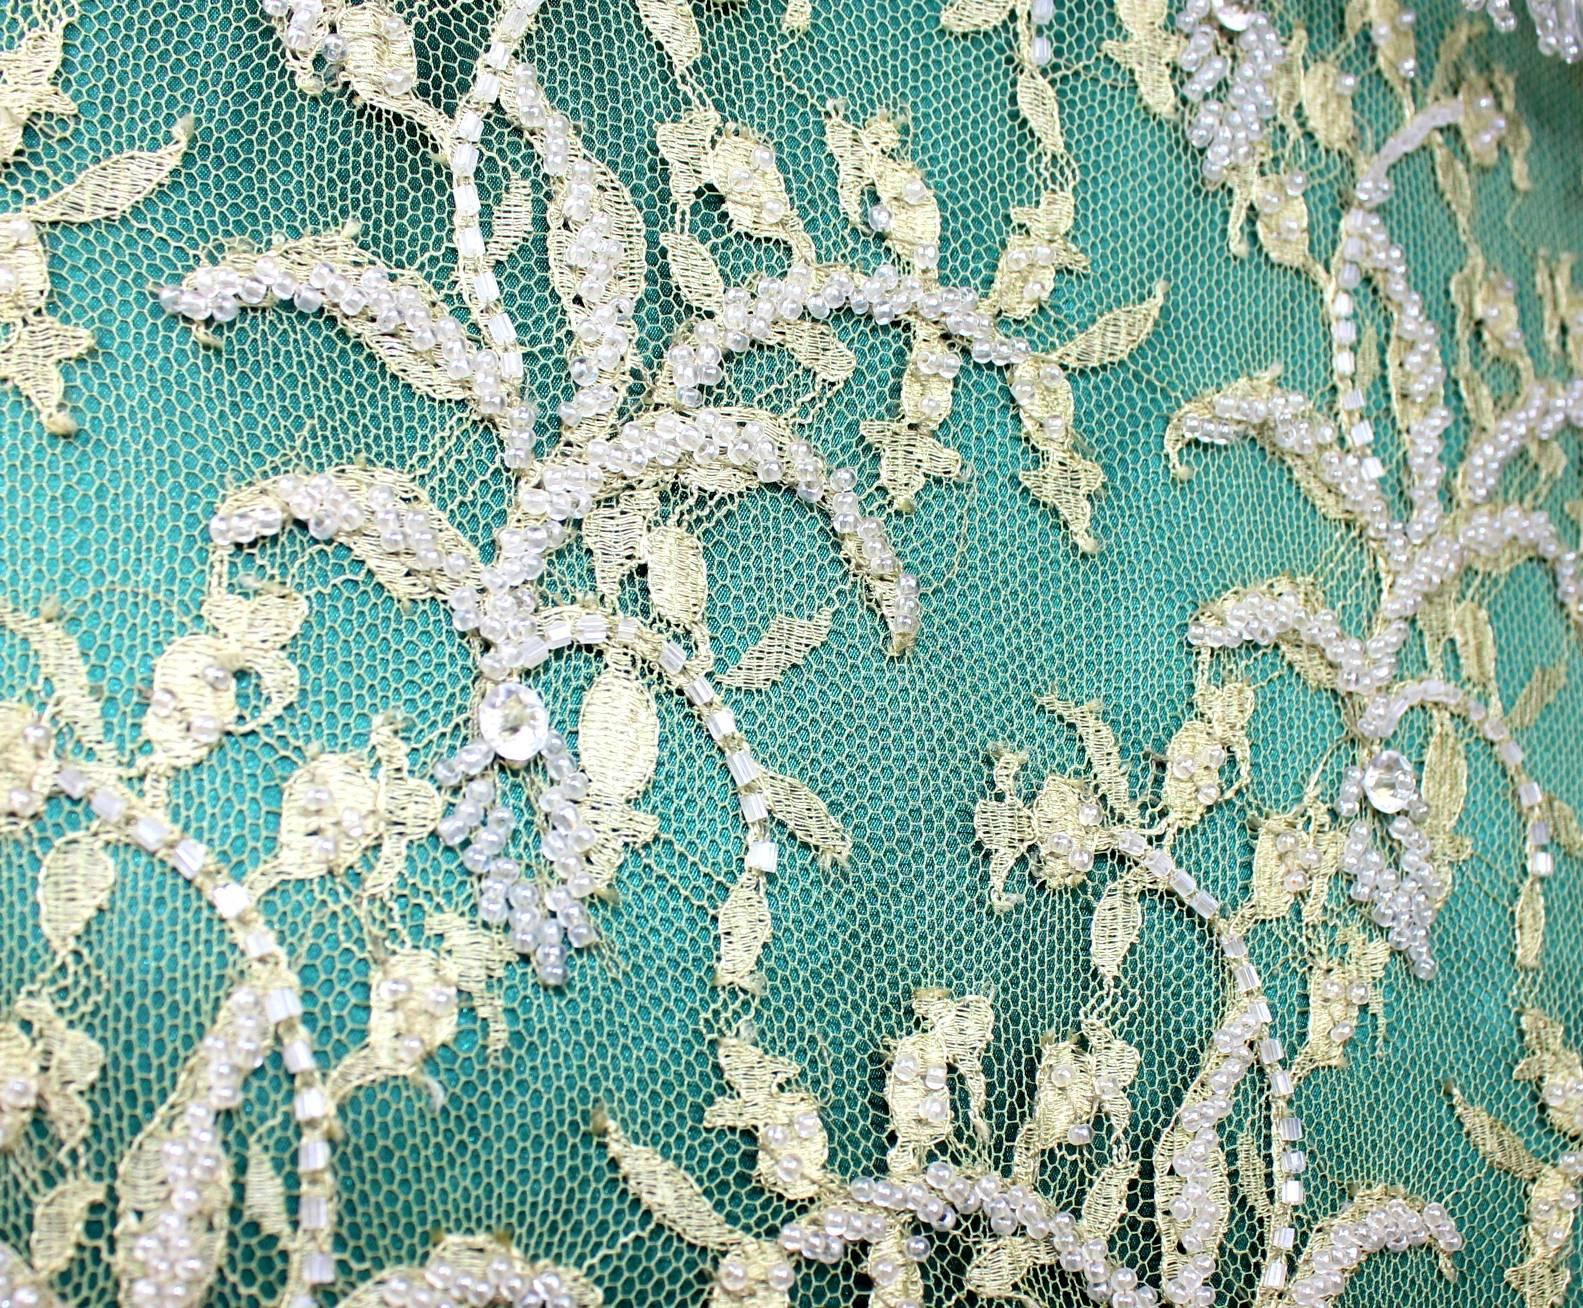 Gray UNWORN Dolce & Gabbana Hand-Embroidered Lace Fringe Evening Skirt SATC 1990s 40